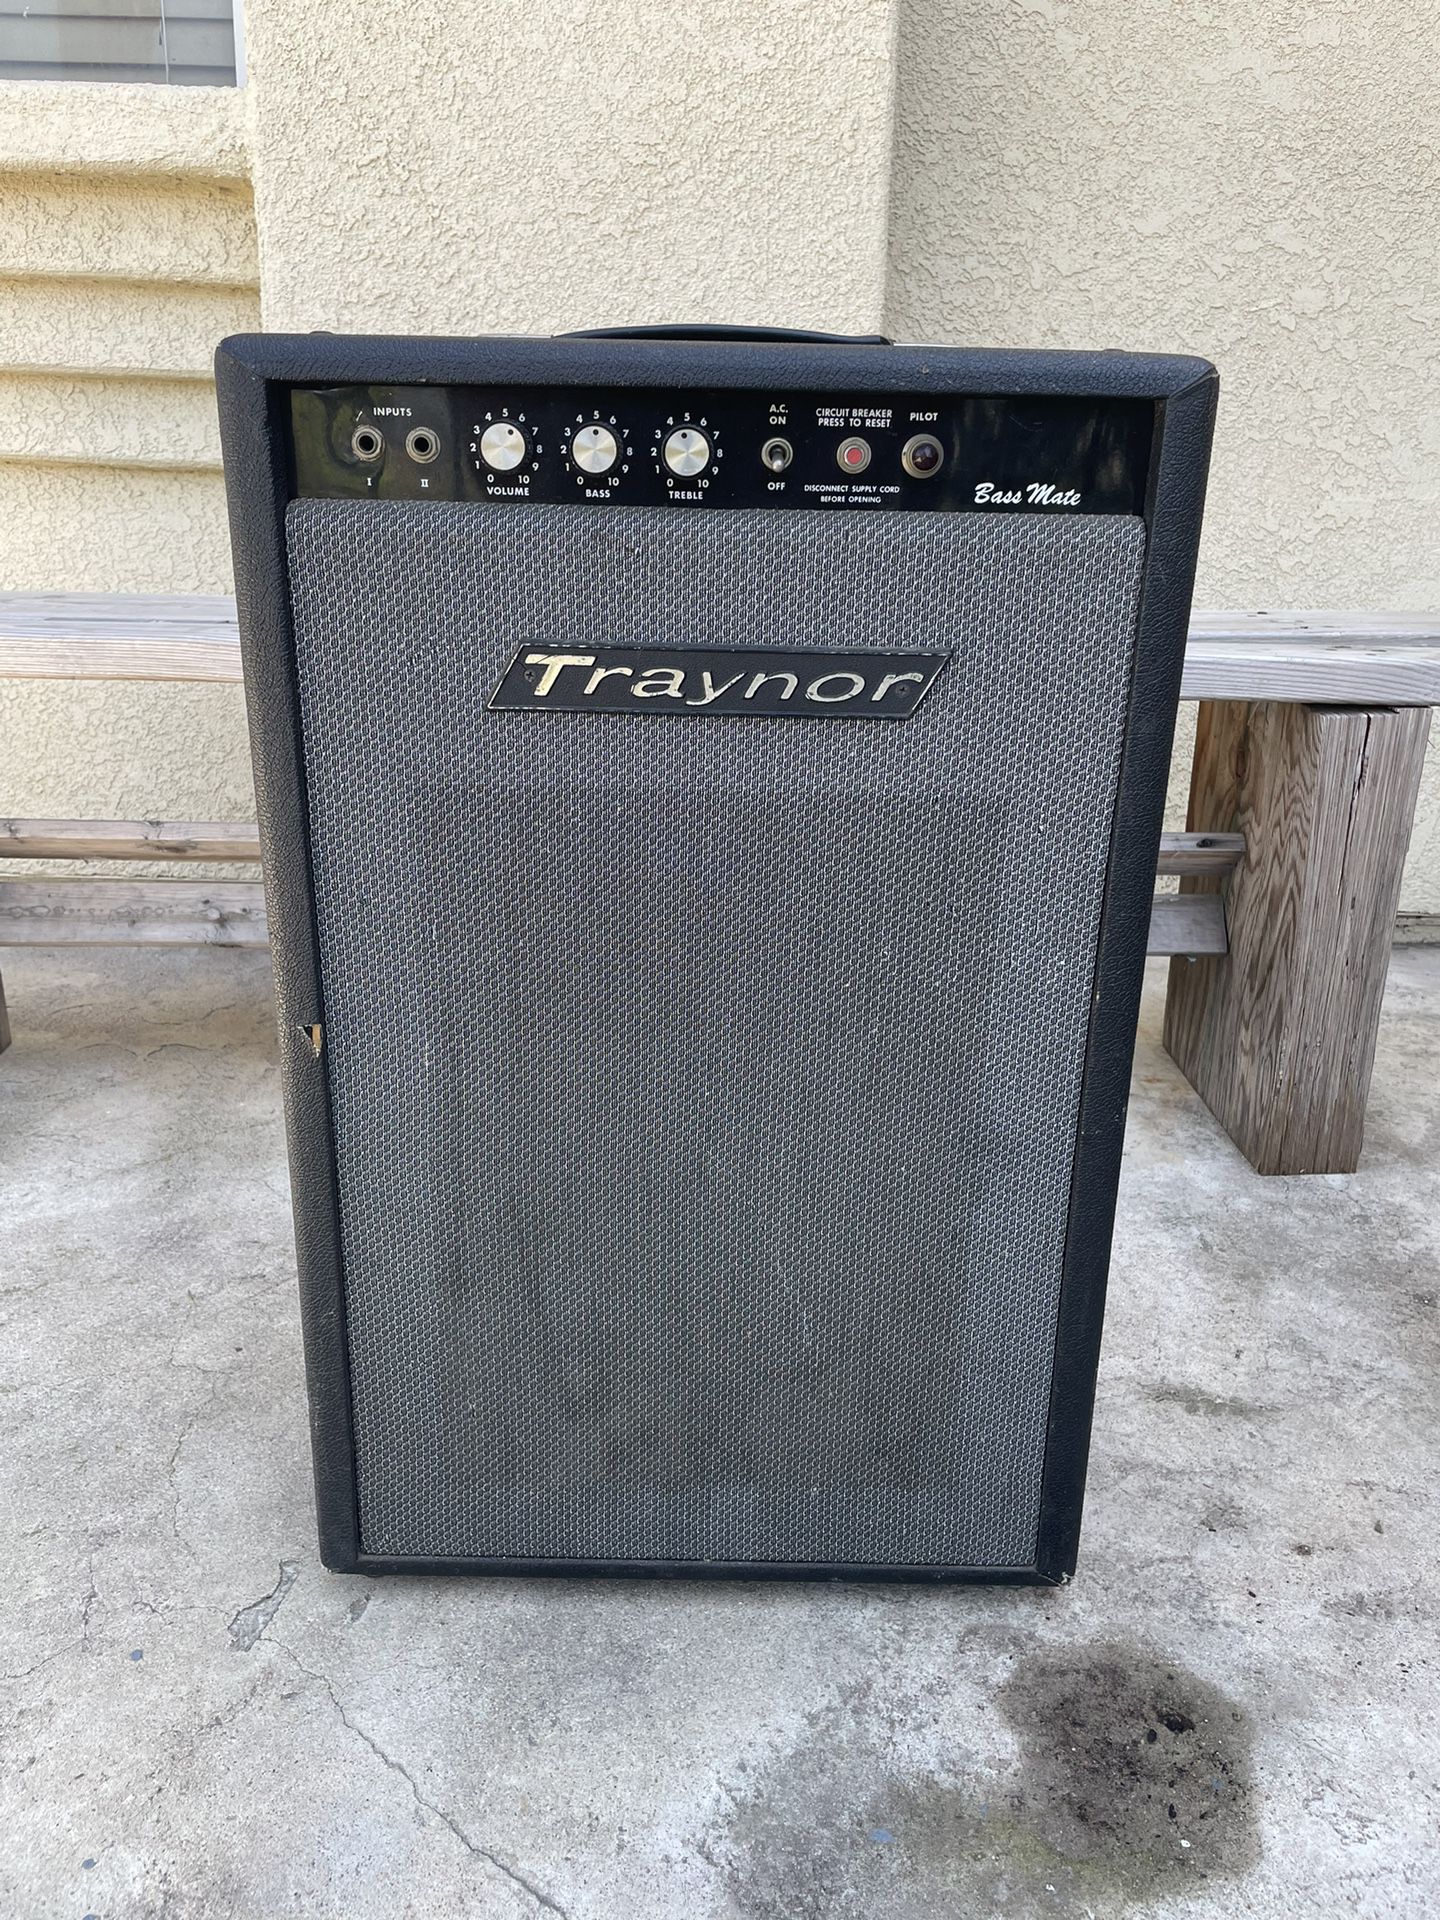 Traynor Bassmate Guitar Amp For Sale